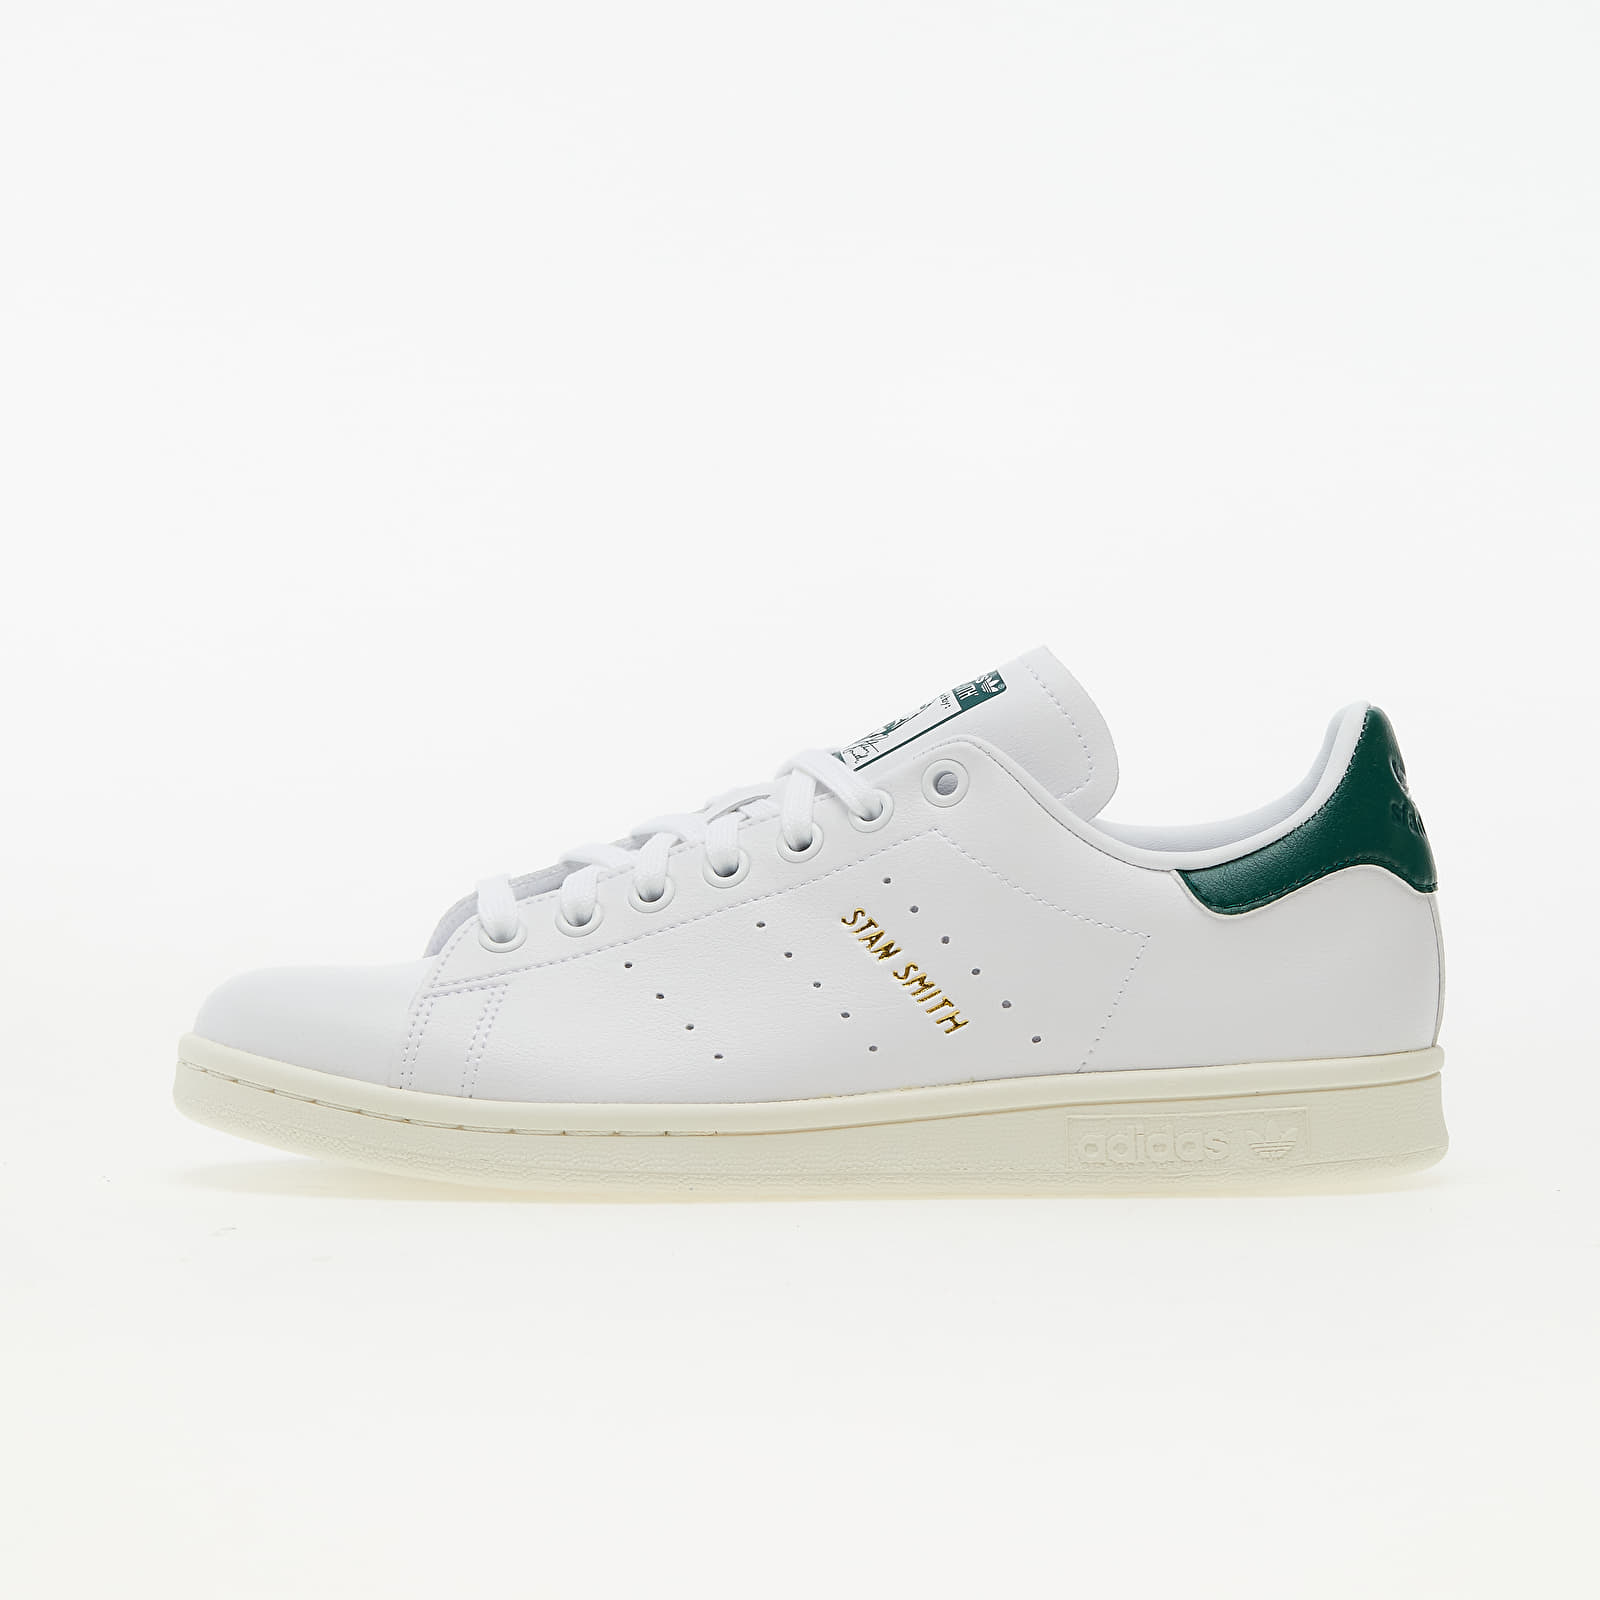 Men's shoes adidas Stan Smith Ftw White/ Core Green/ Off White